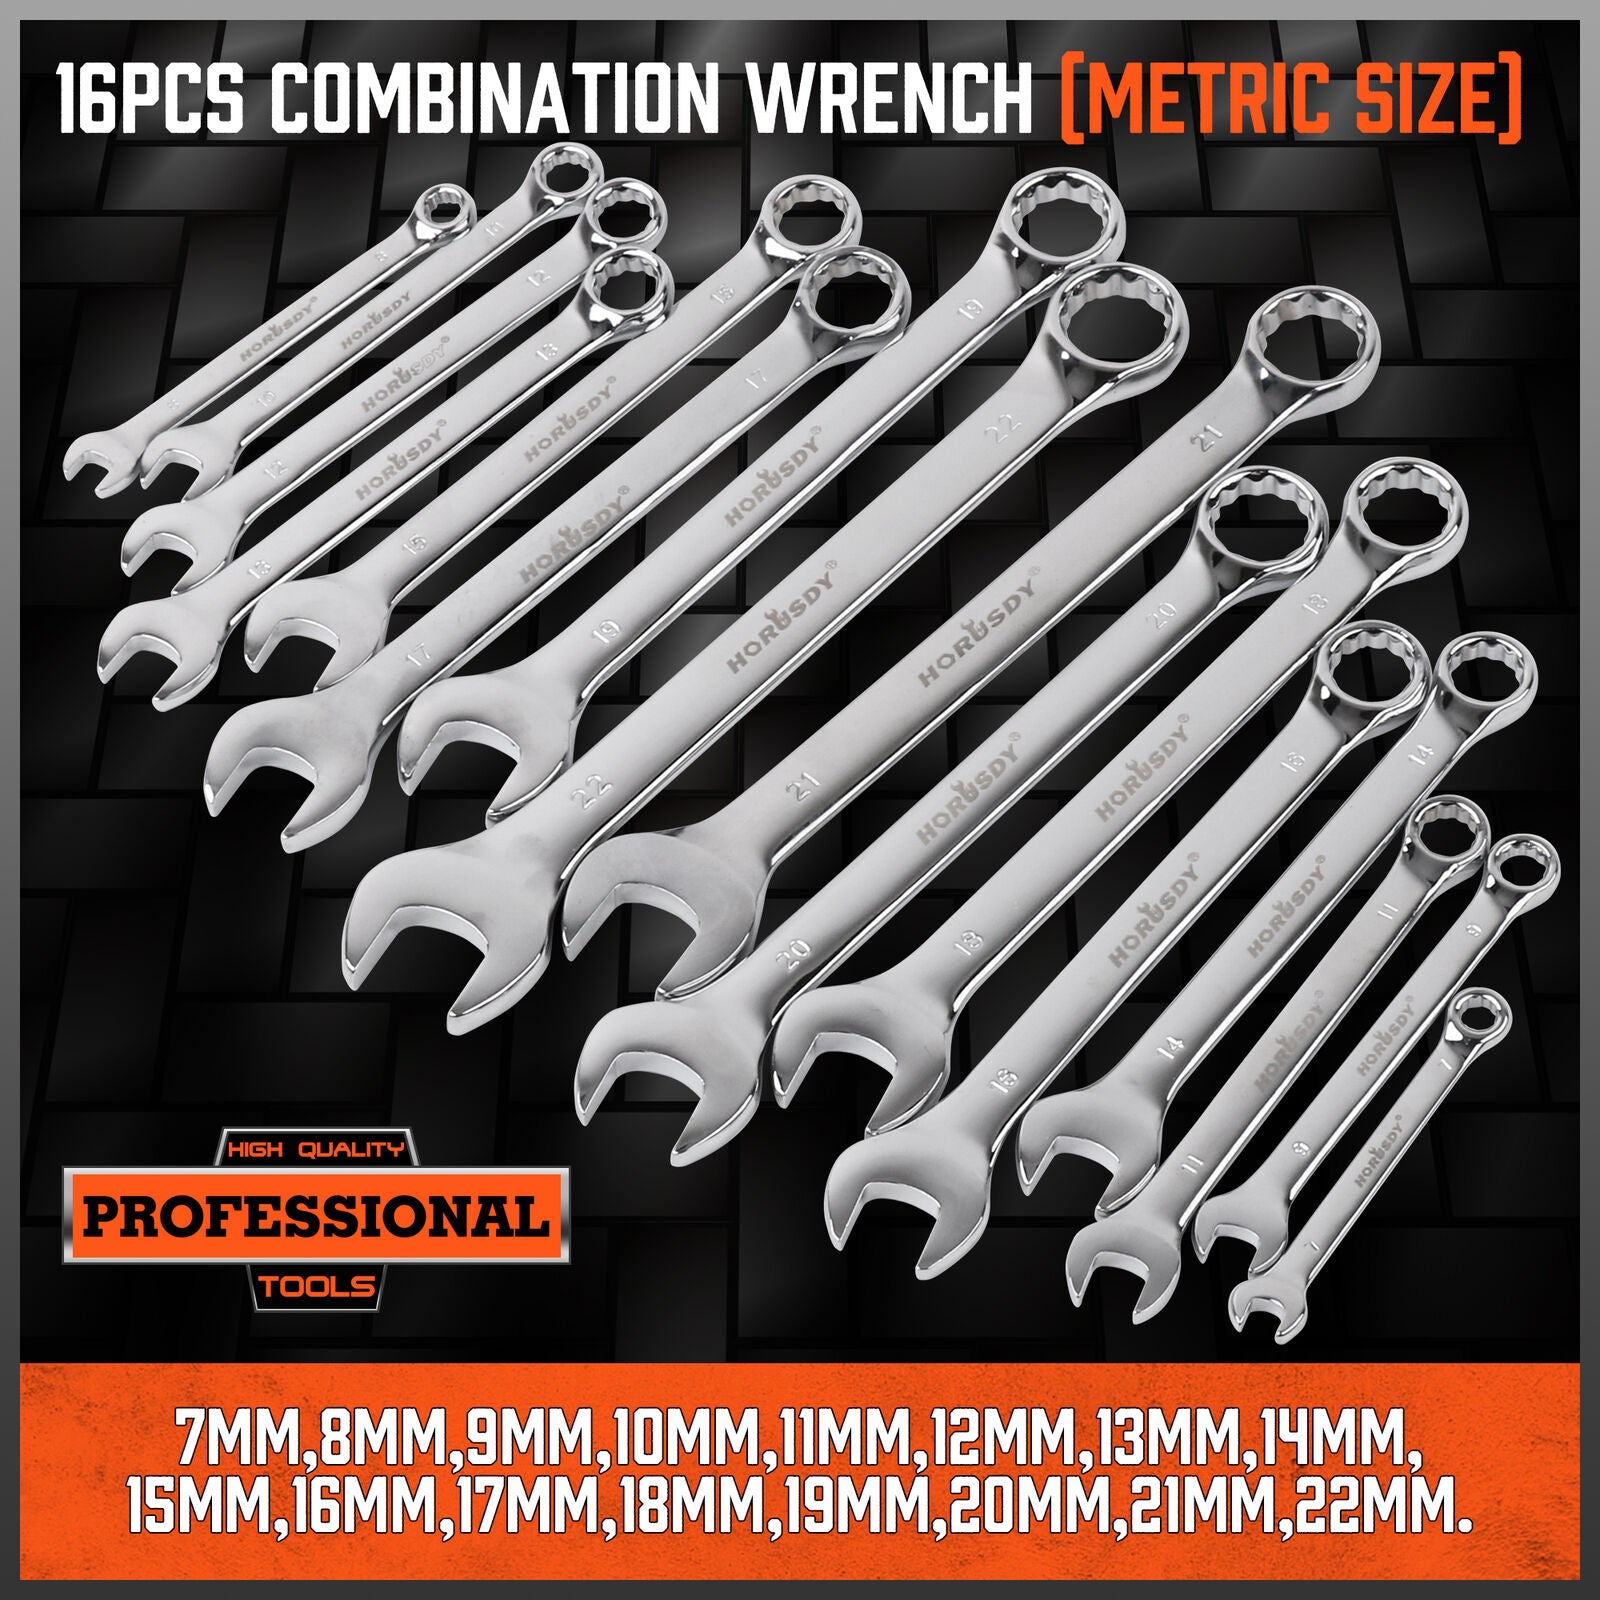 Durable 32-Piece Chrome Vanadium Steel Wrench Set with Mirror Polish Finish